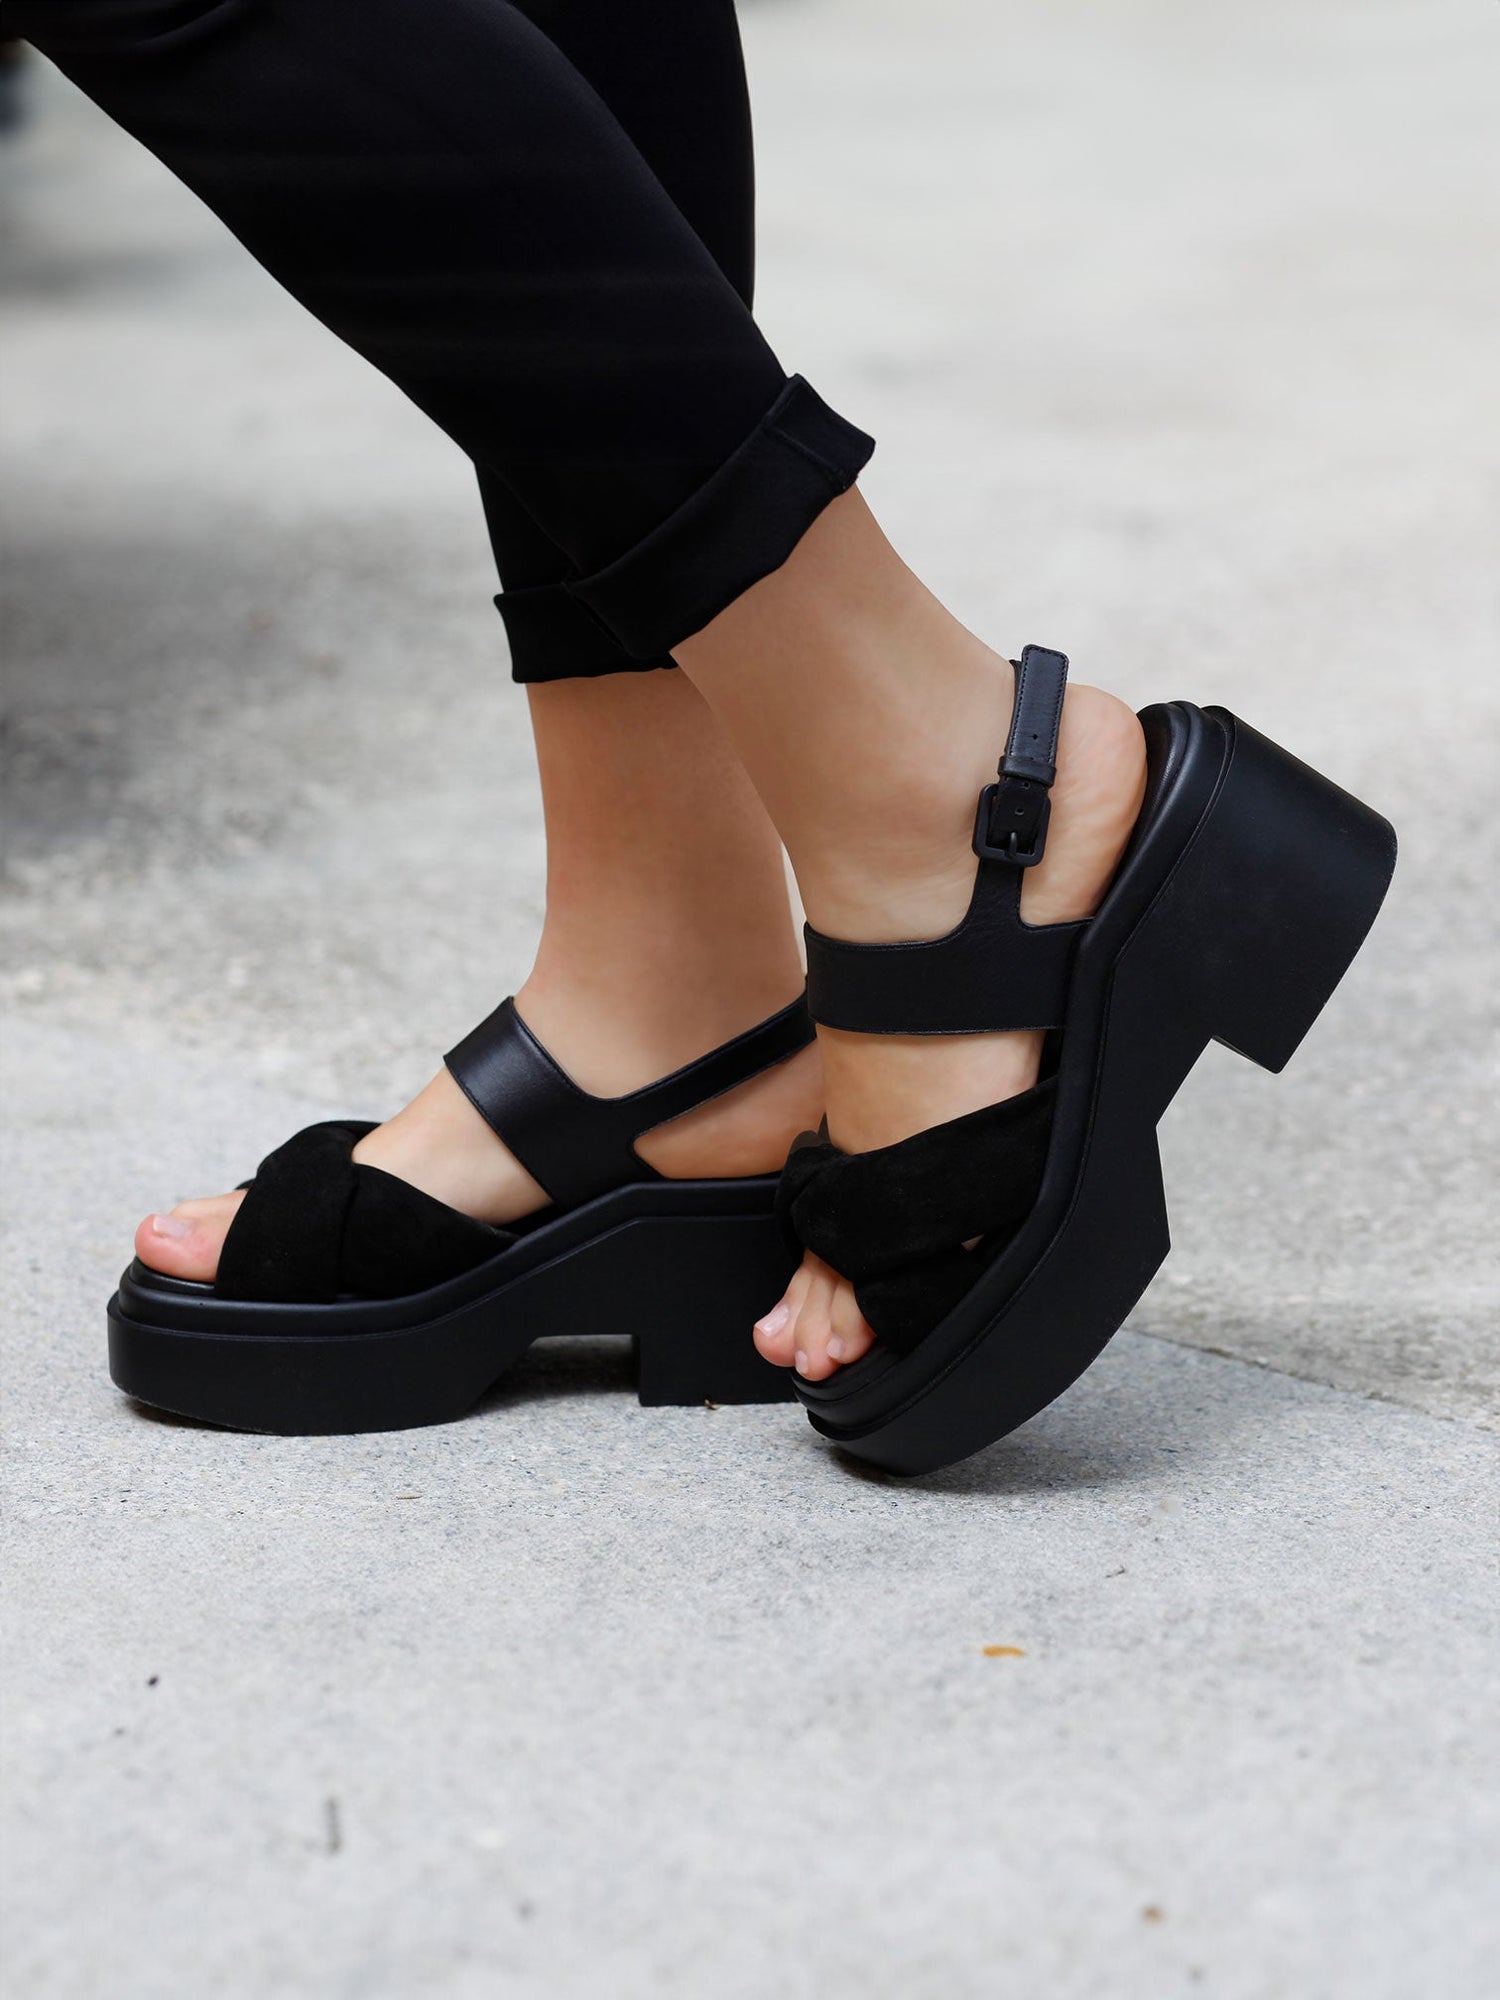 SANDALS - NOVIA sandals, suede black - 3606063983051 - Clergerie Paris - Europe